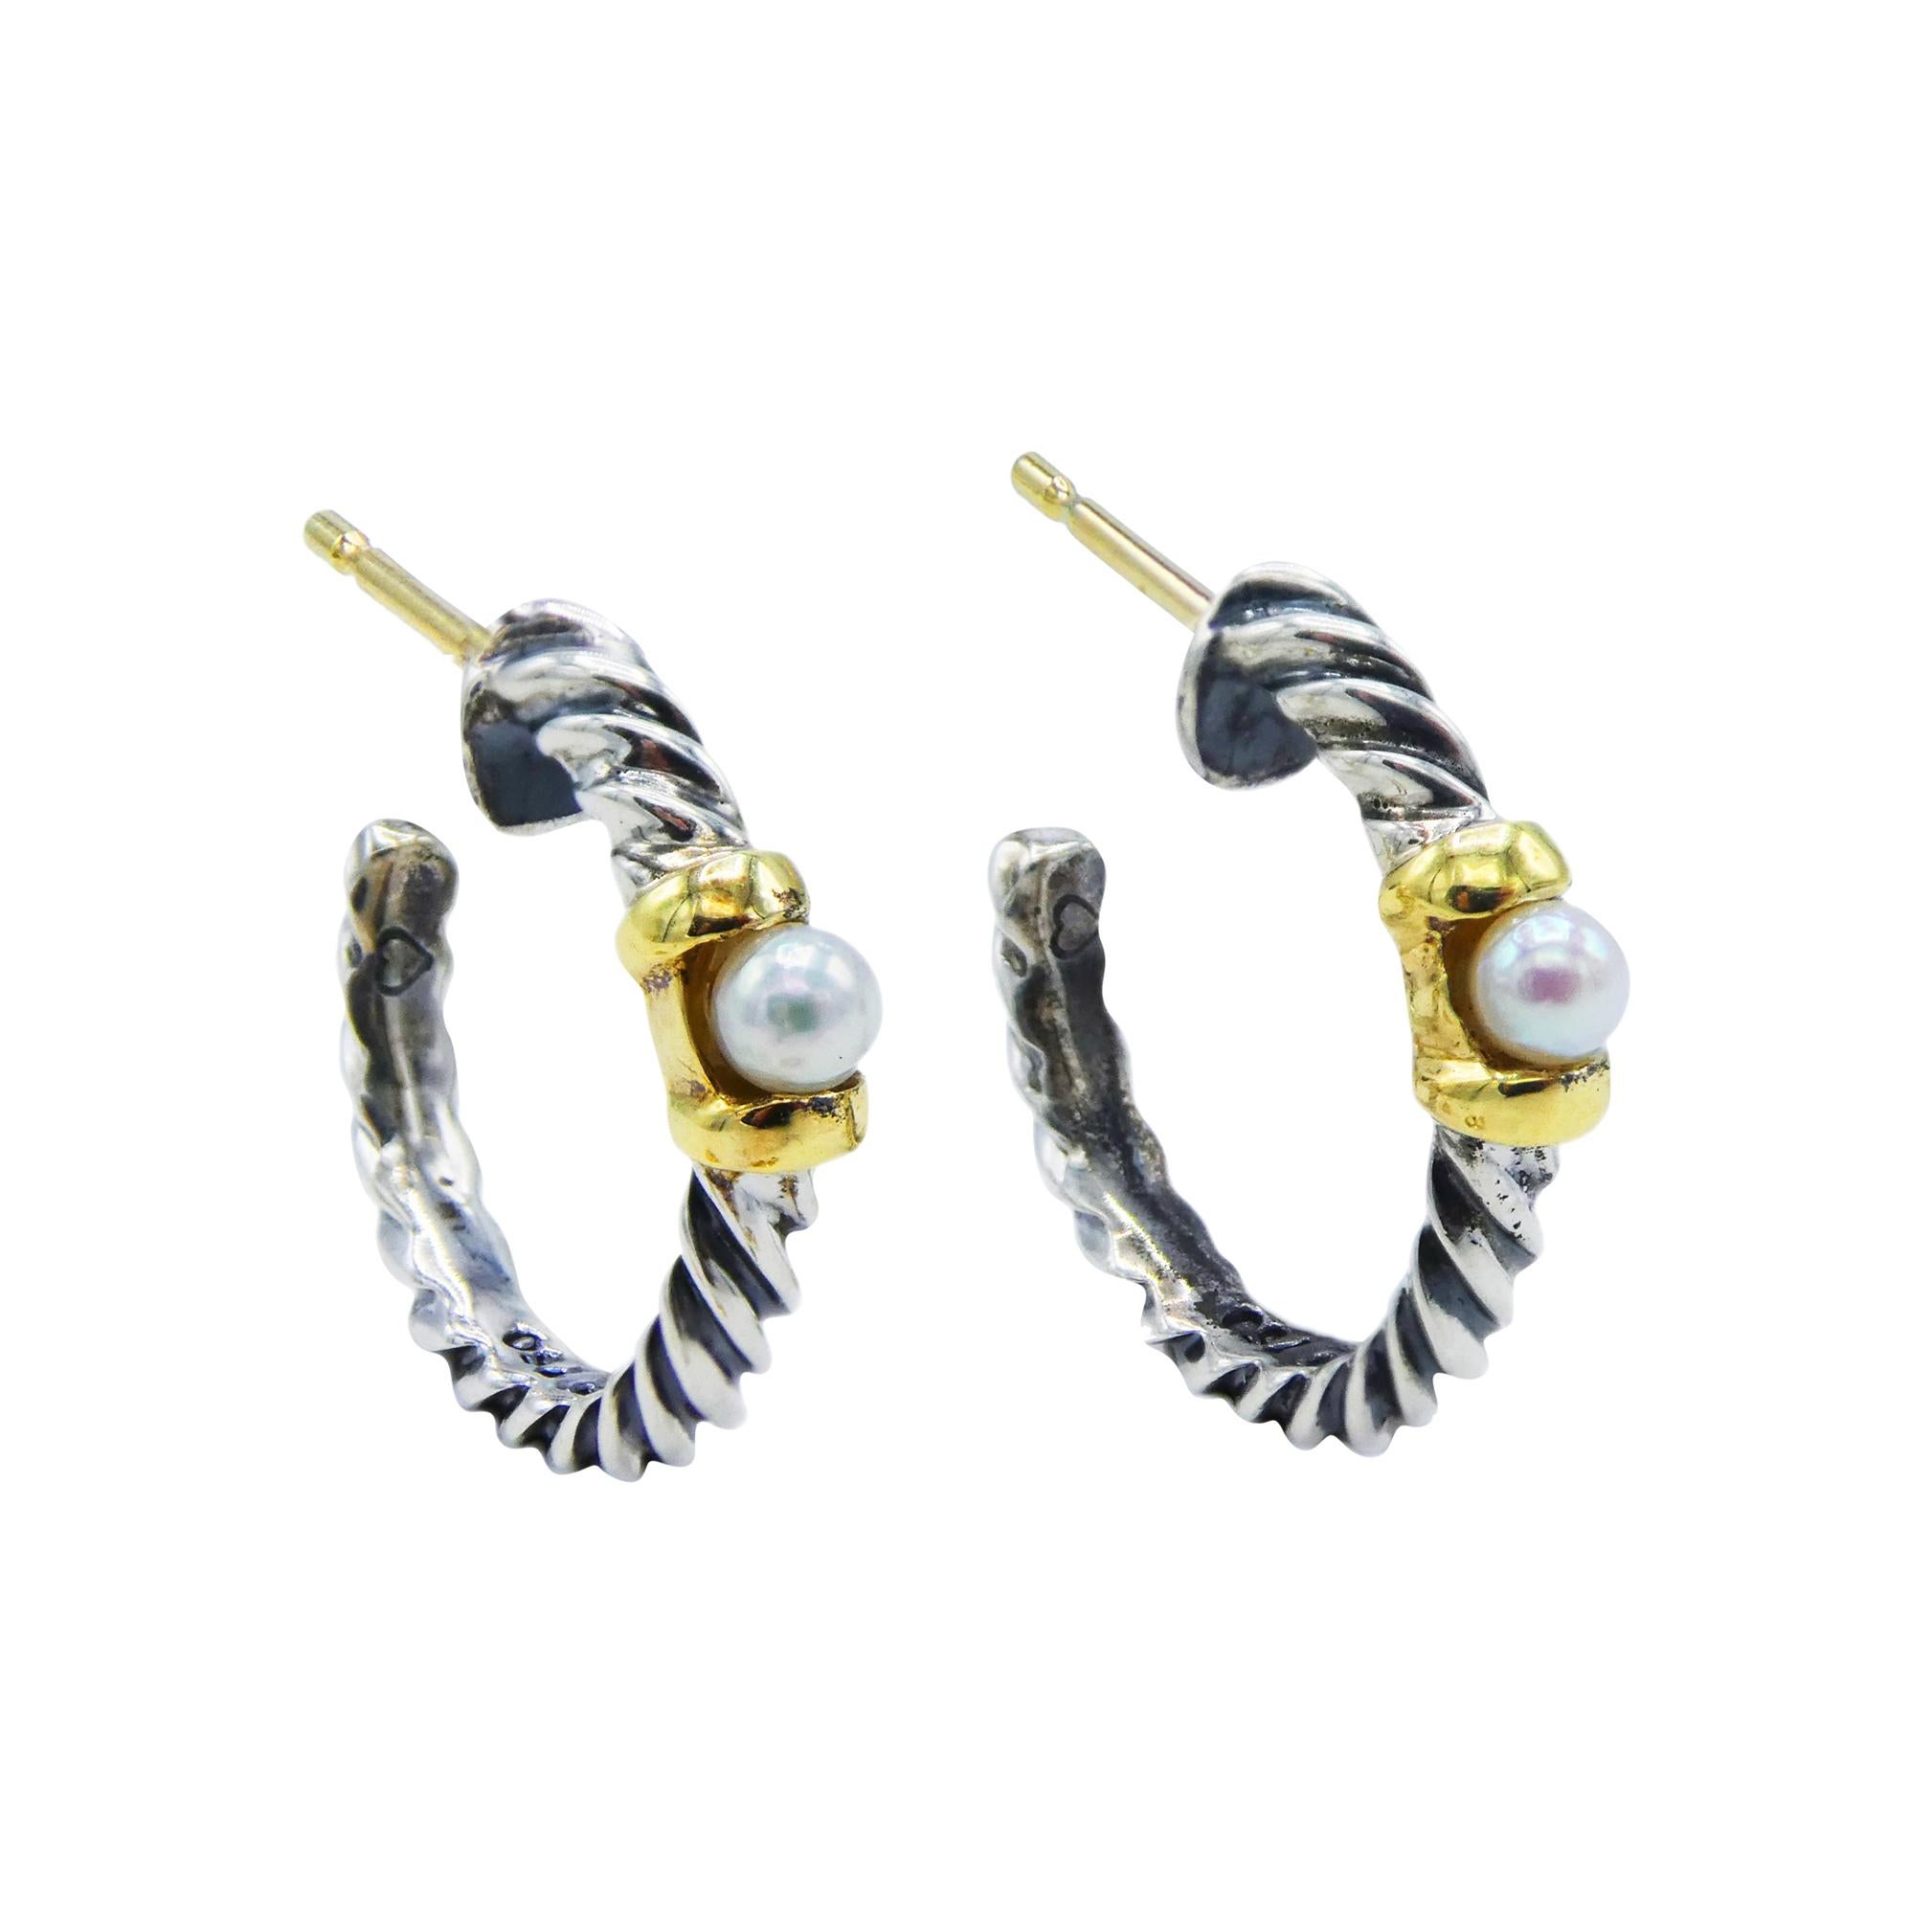 David Yurman Mini Hoop Cable Earrings Petite Pearl Sterling Silver 18 Karat Gold